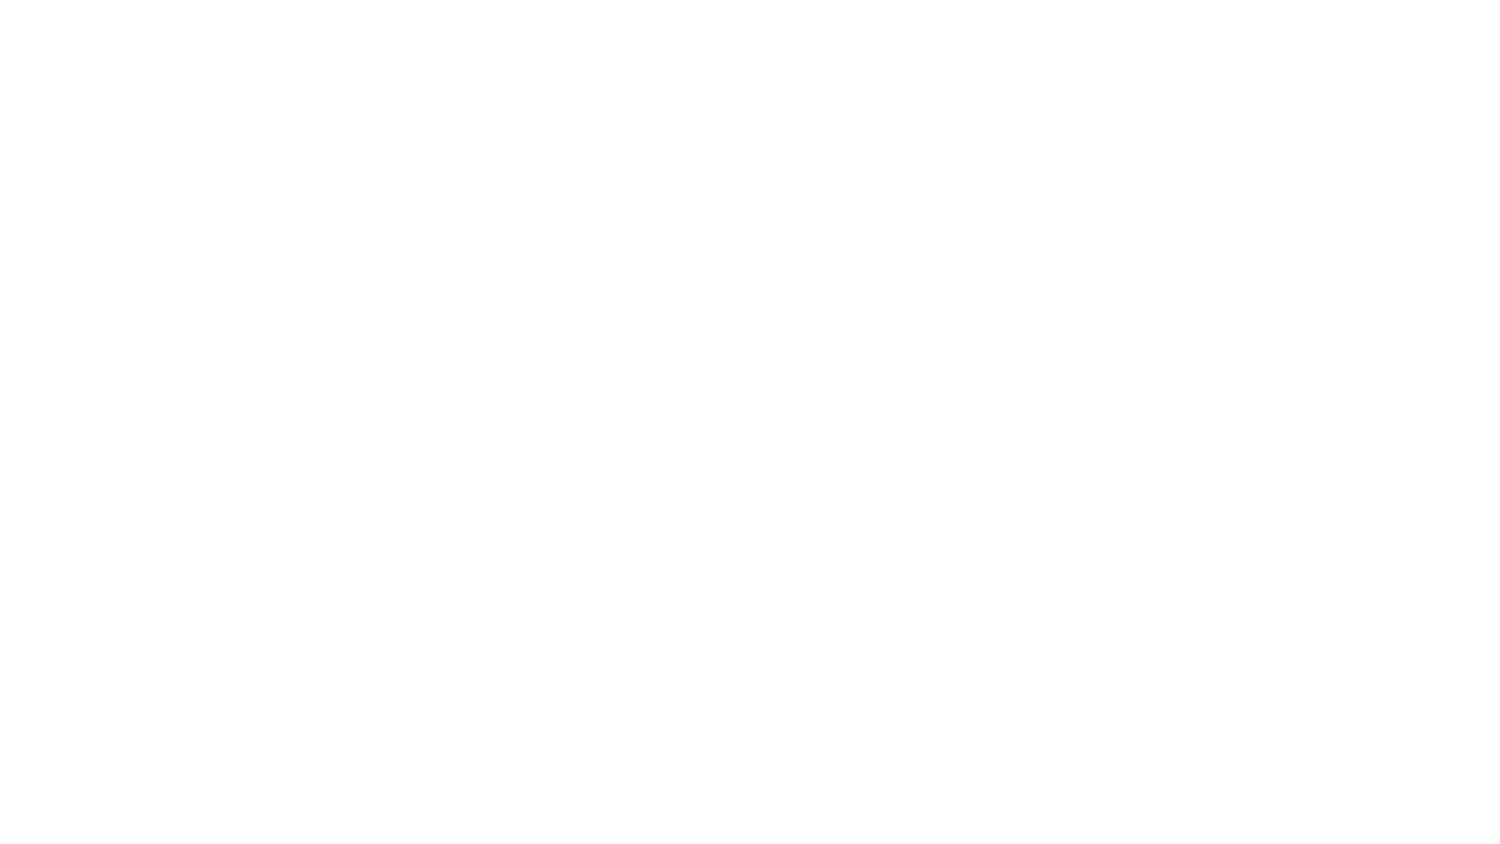 Jeffers Driving Academy